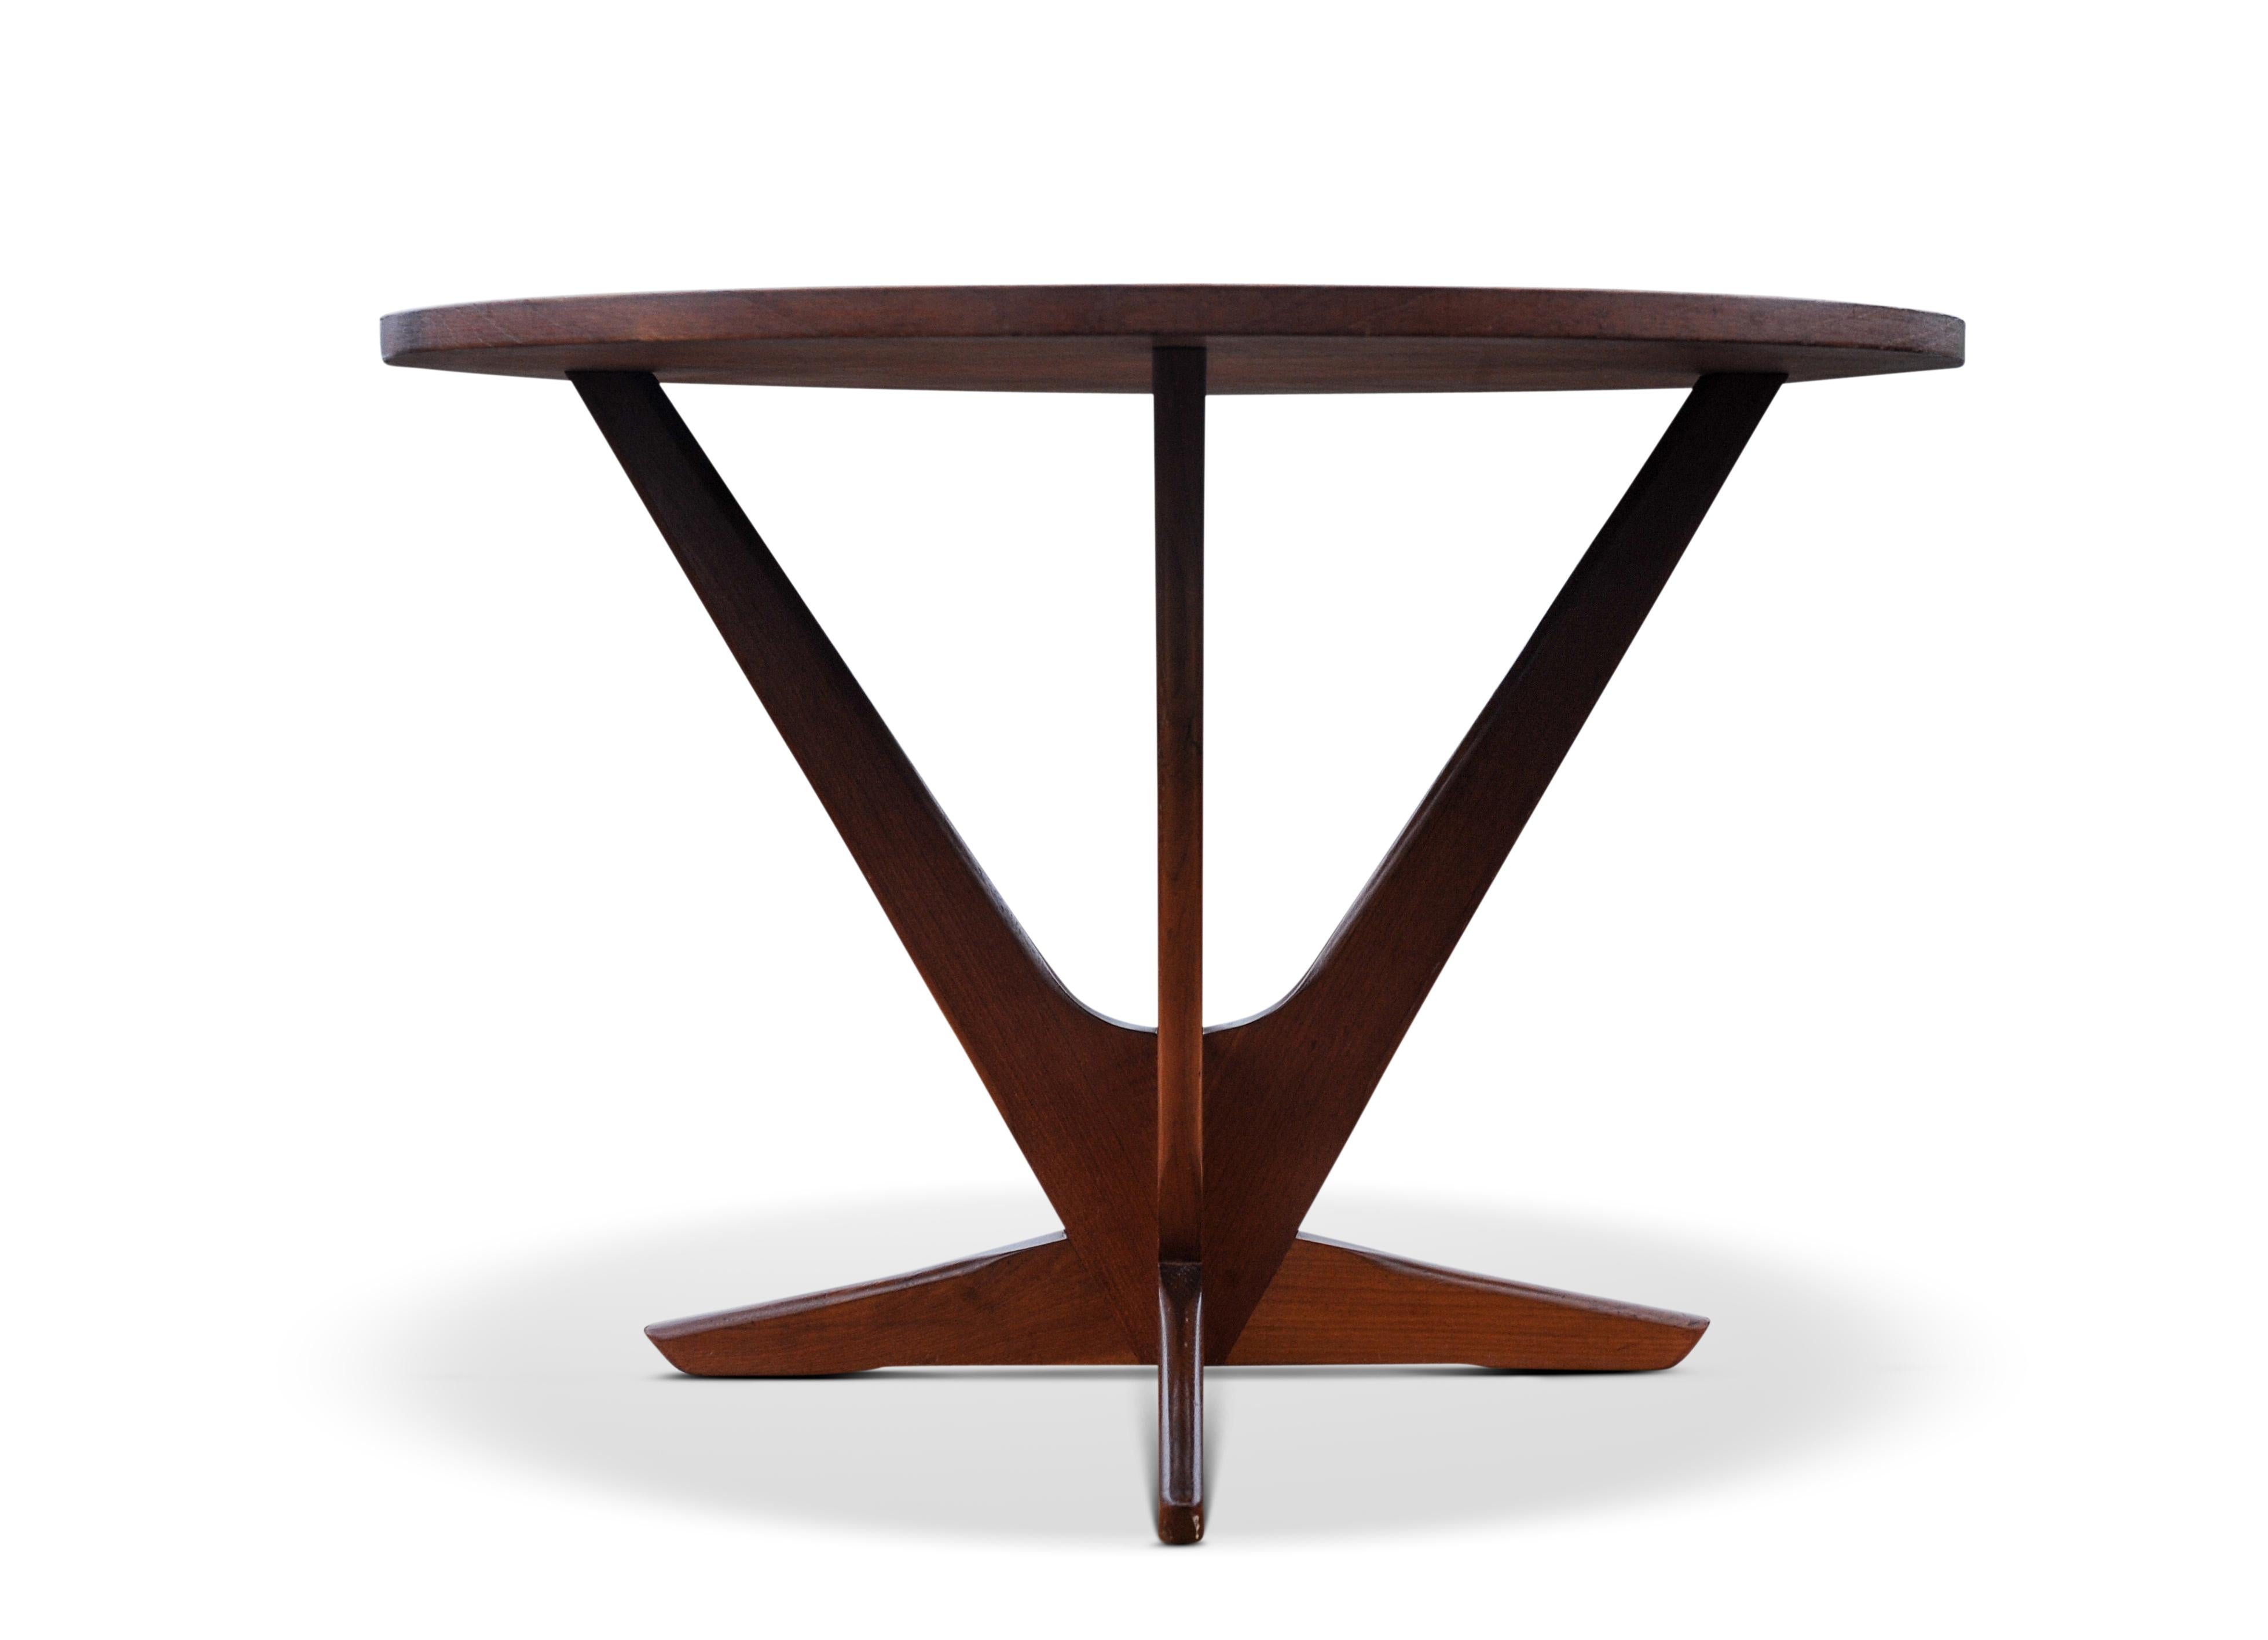 20ième siècle Georg Jensen Kubus table basse radial en teck mi-siècle moderne danois en vente